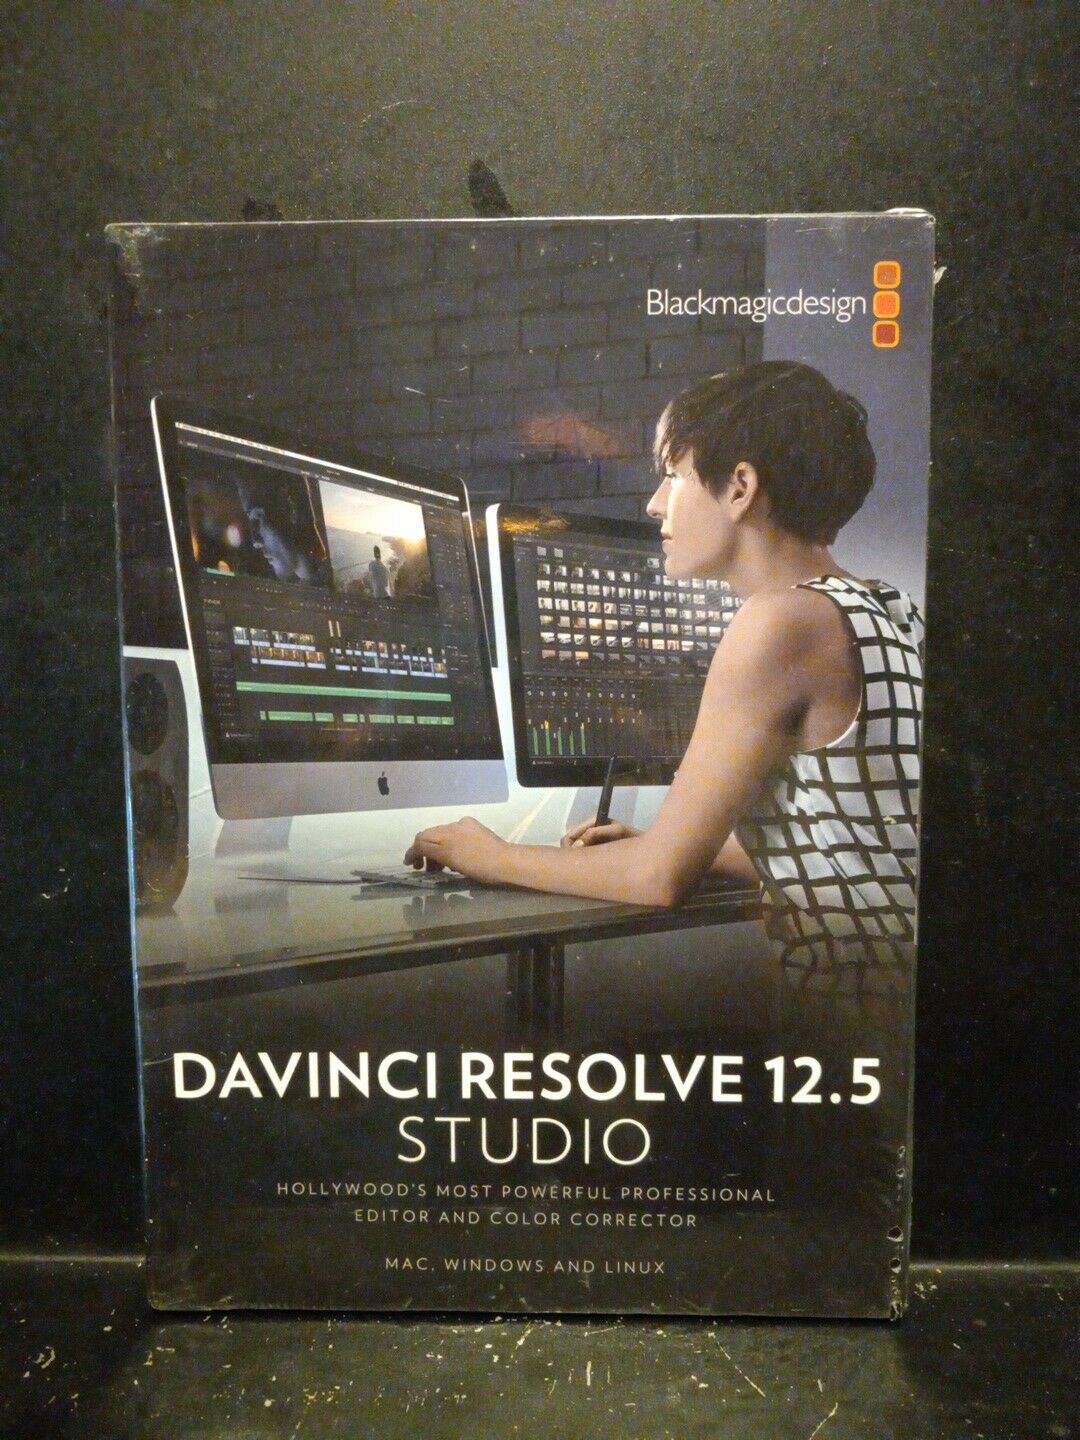 Blackmagic Davinci Resolve 12.5 Studio Software with USB Dongle **NEW SEALED**